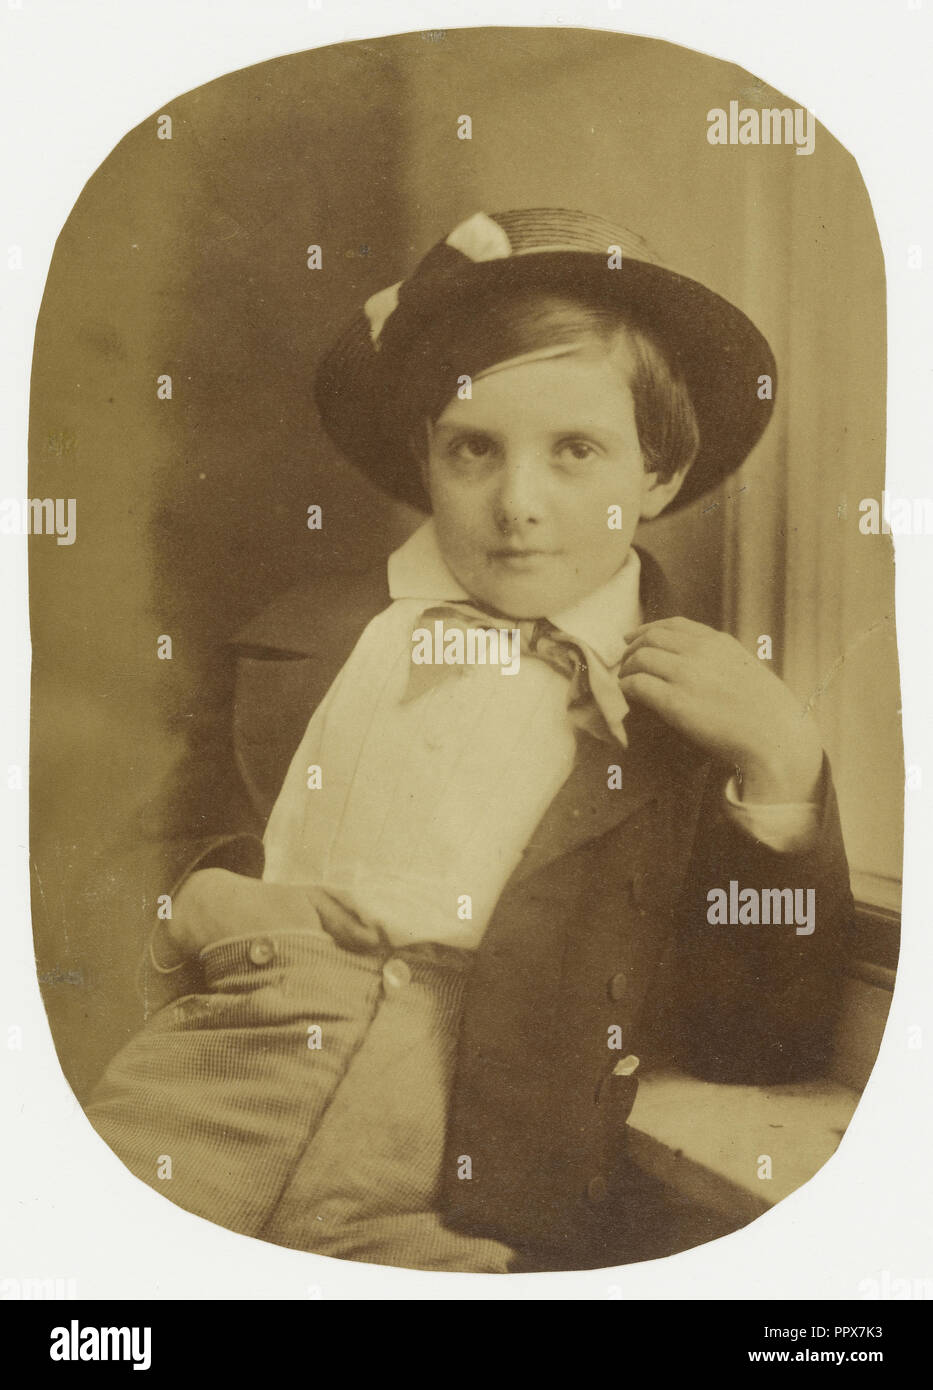 Portrait of a Young Boy; Oscar Gustave Rejlander, British, born Sweden, 1813 - 1875, about 1860; Albumen silver print Stock Photo